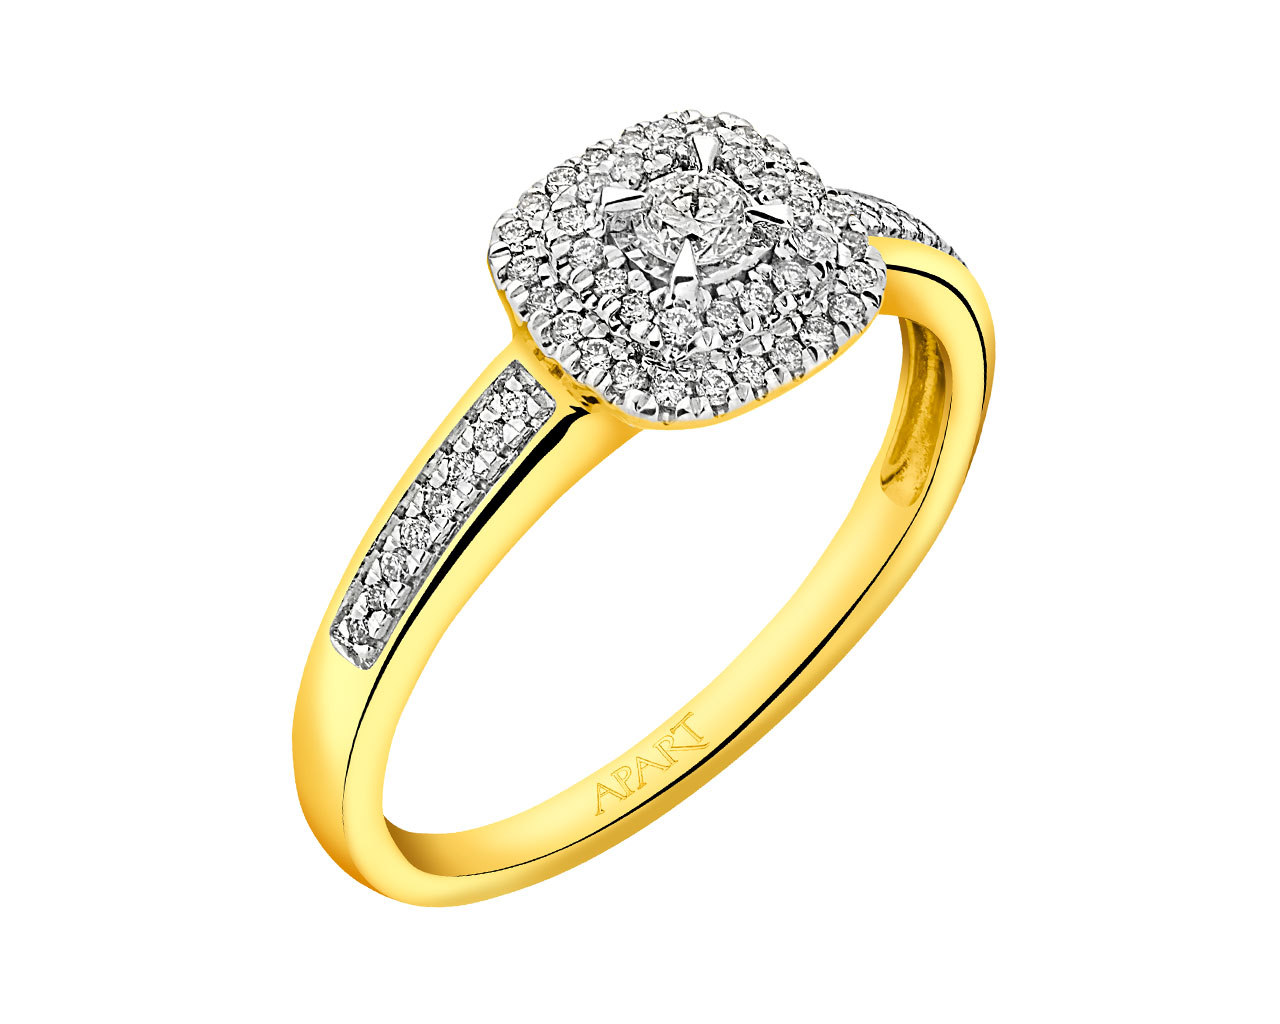 Prsten ze žlutého a bílého zlata s brilianty  0,22 ct - ryzost 585